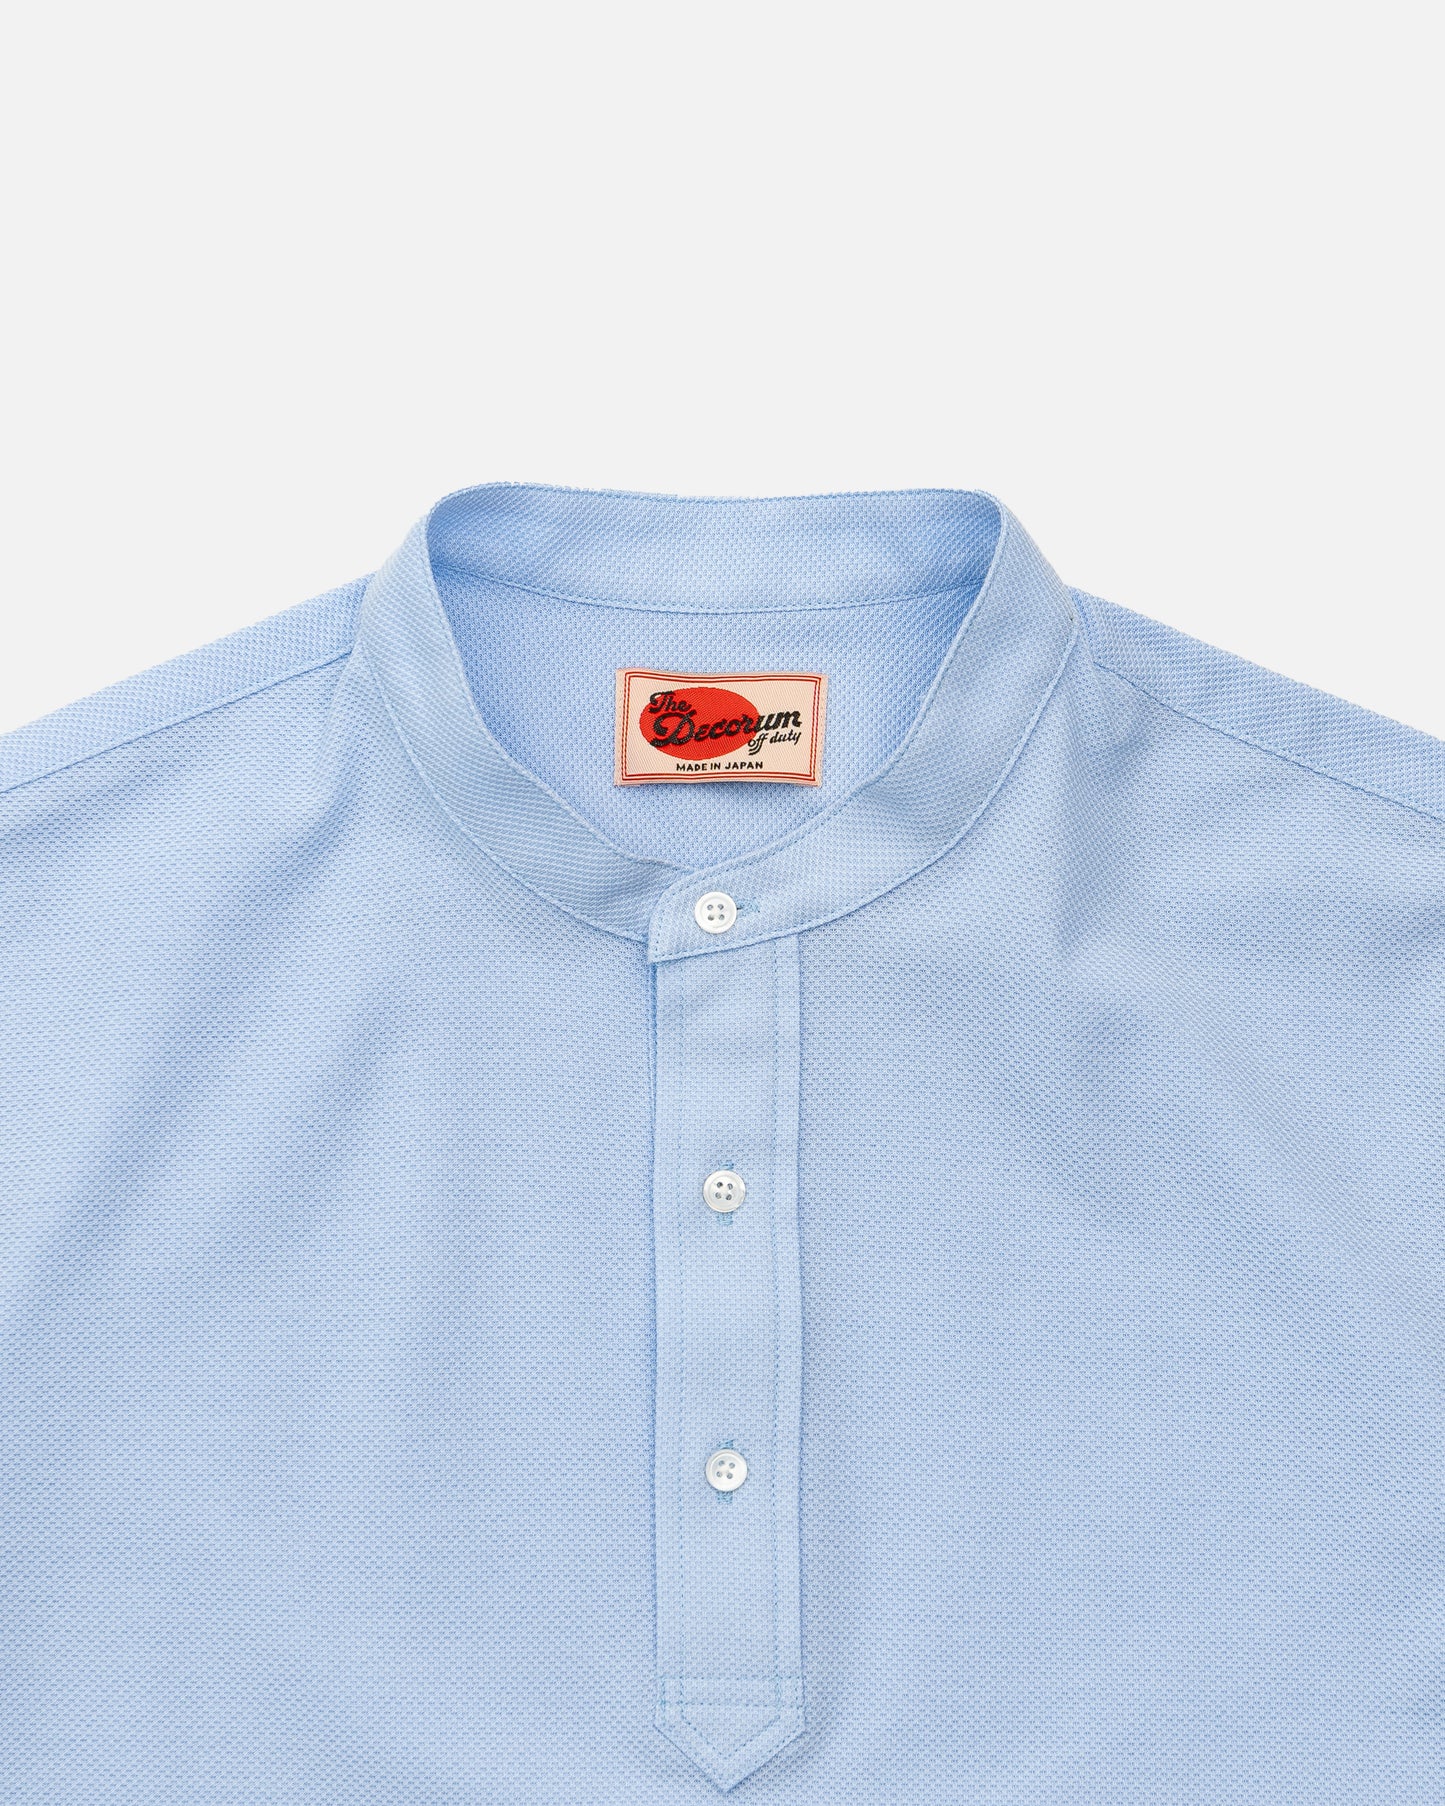 The Decorum Mandarin Collar Polo Shirt - Light Blue